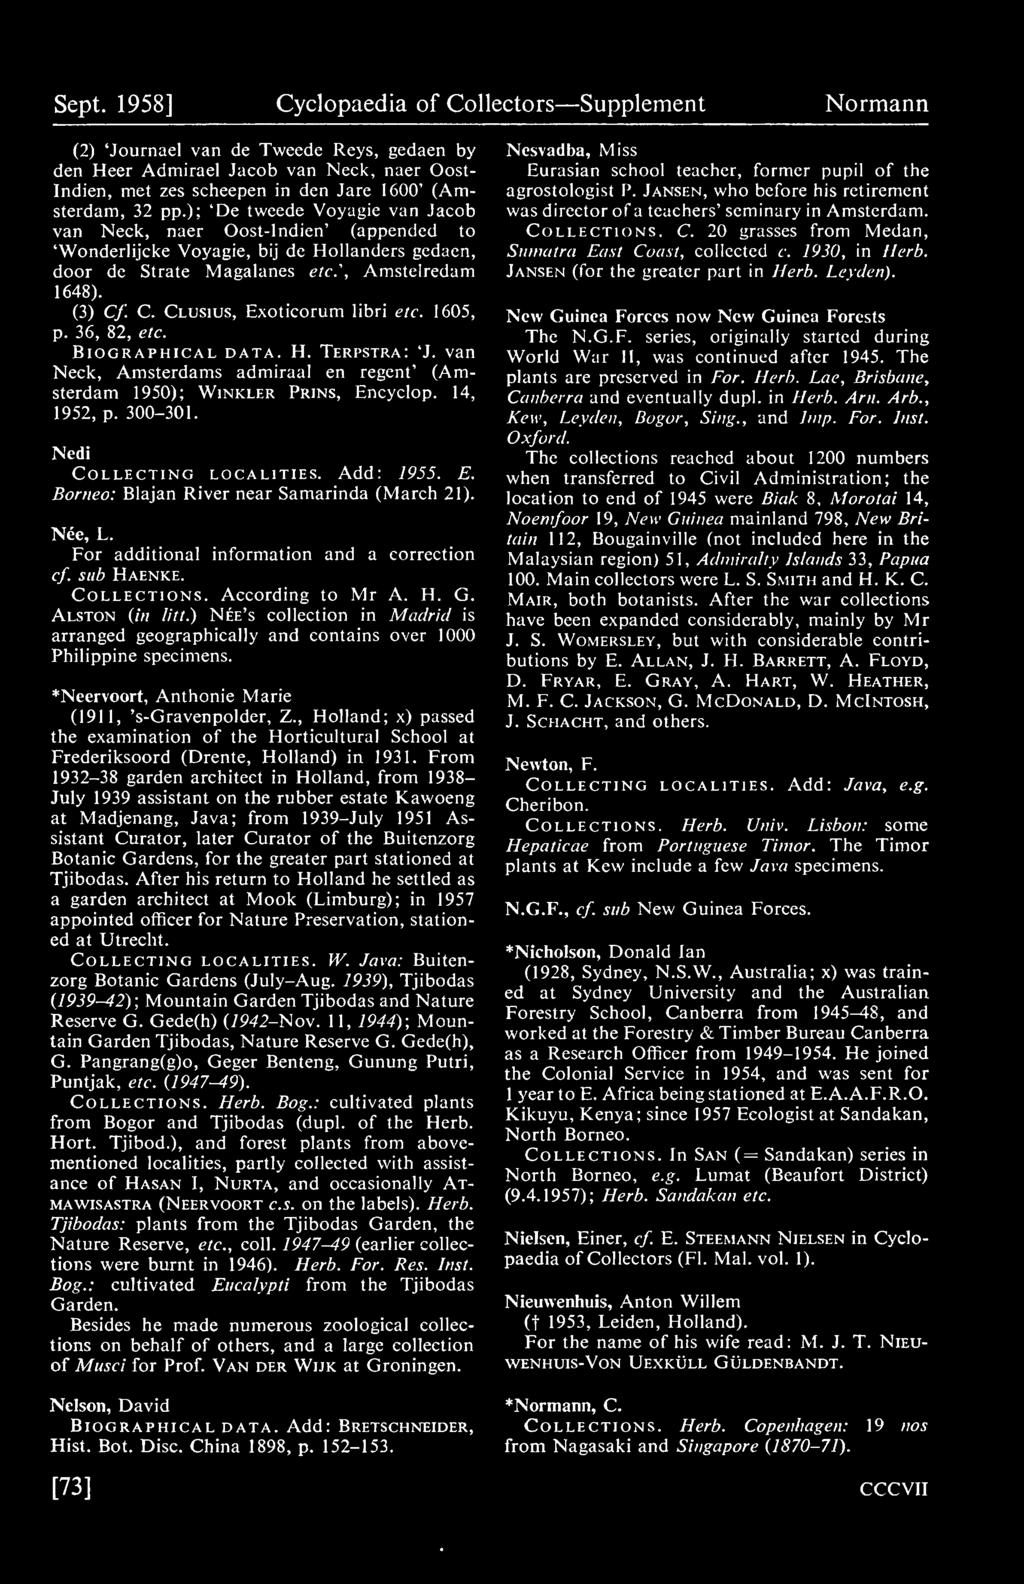 . C. Clusius, Exoticorum libri etc. 1605, p. 36, 82, etc. Biographical data. H. Terpstra: 'J. van Neck, Amsterdams admiraal en regent' (Amsterdam 1950); Winkler Prins, Encyclop. 14, 1952, p. 300-301.